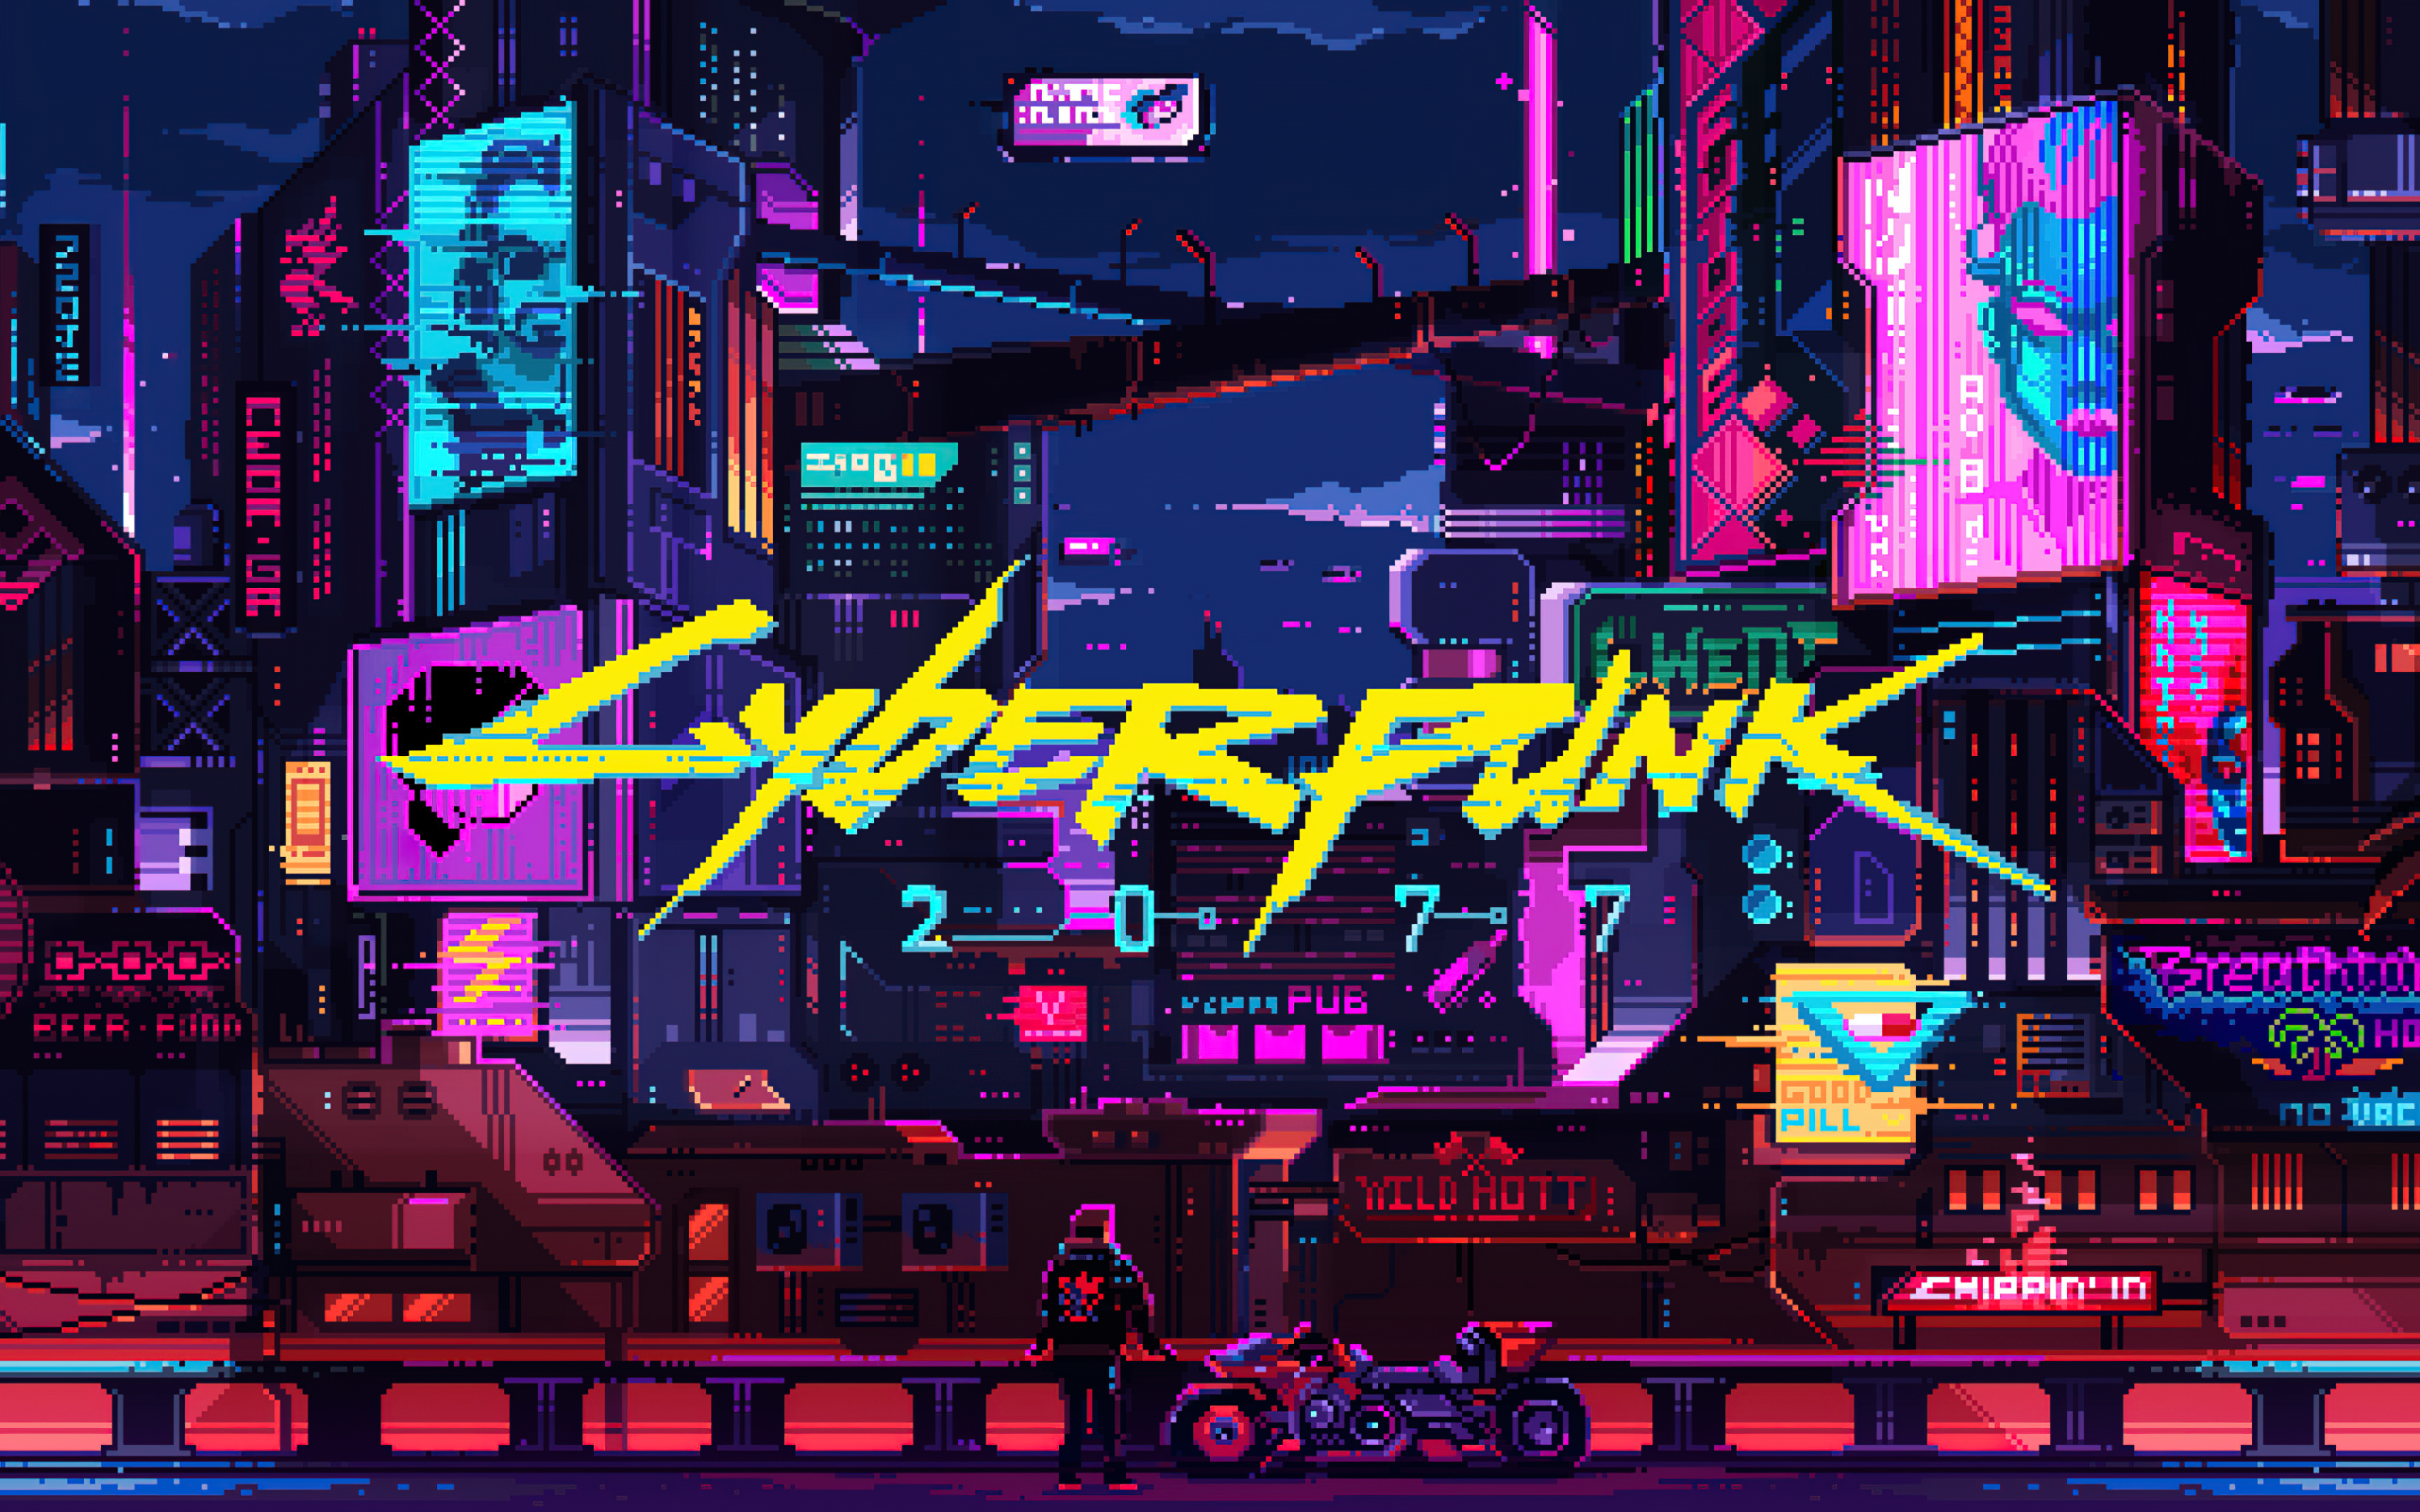 Download wallpaper: Cyberpunk 2077 2 1440x900